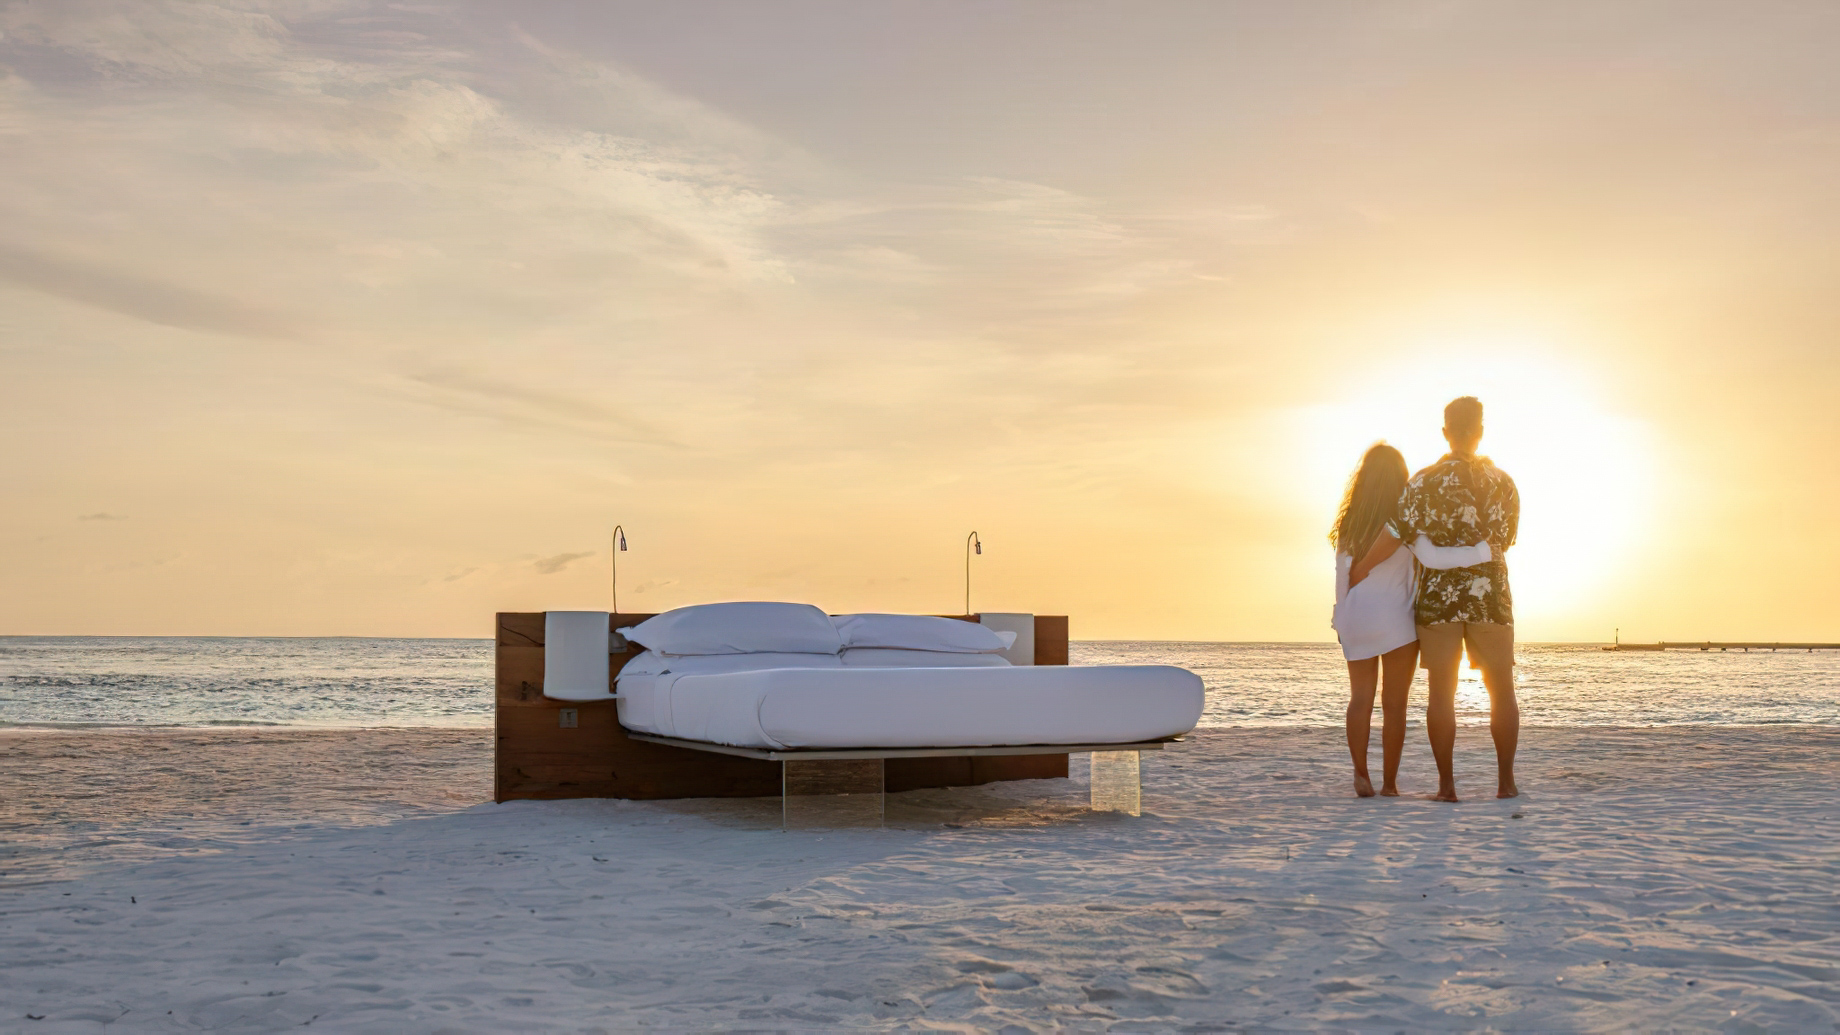 Cocoon Maldives Resort – Ookolhufinolhu, Lhaviyani Atoll, Maldives – Beach Bed Sleeping Experience Sunset